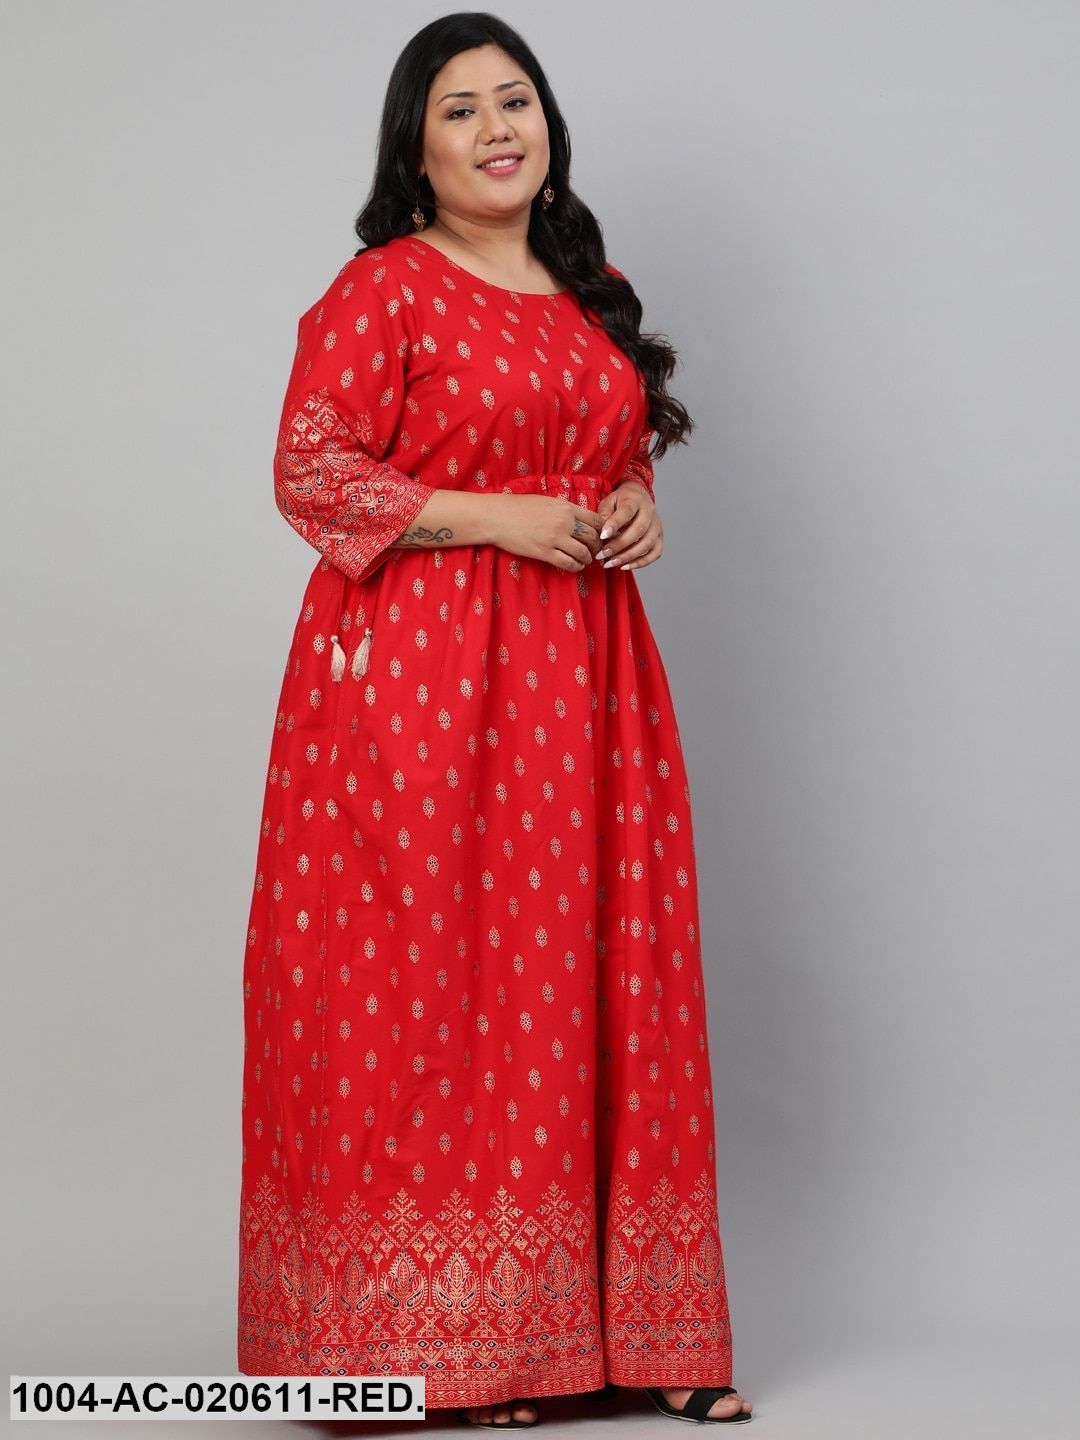 Plus Size Red & Gold Ethnic Motifs Ethnic Maxi Dress